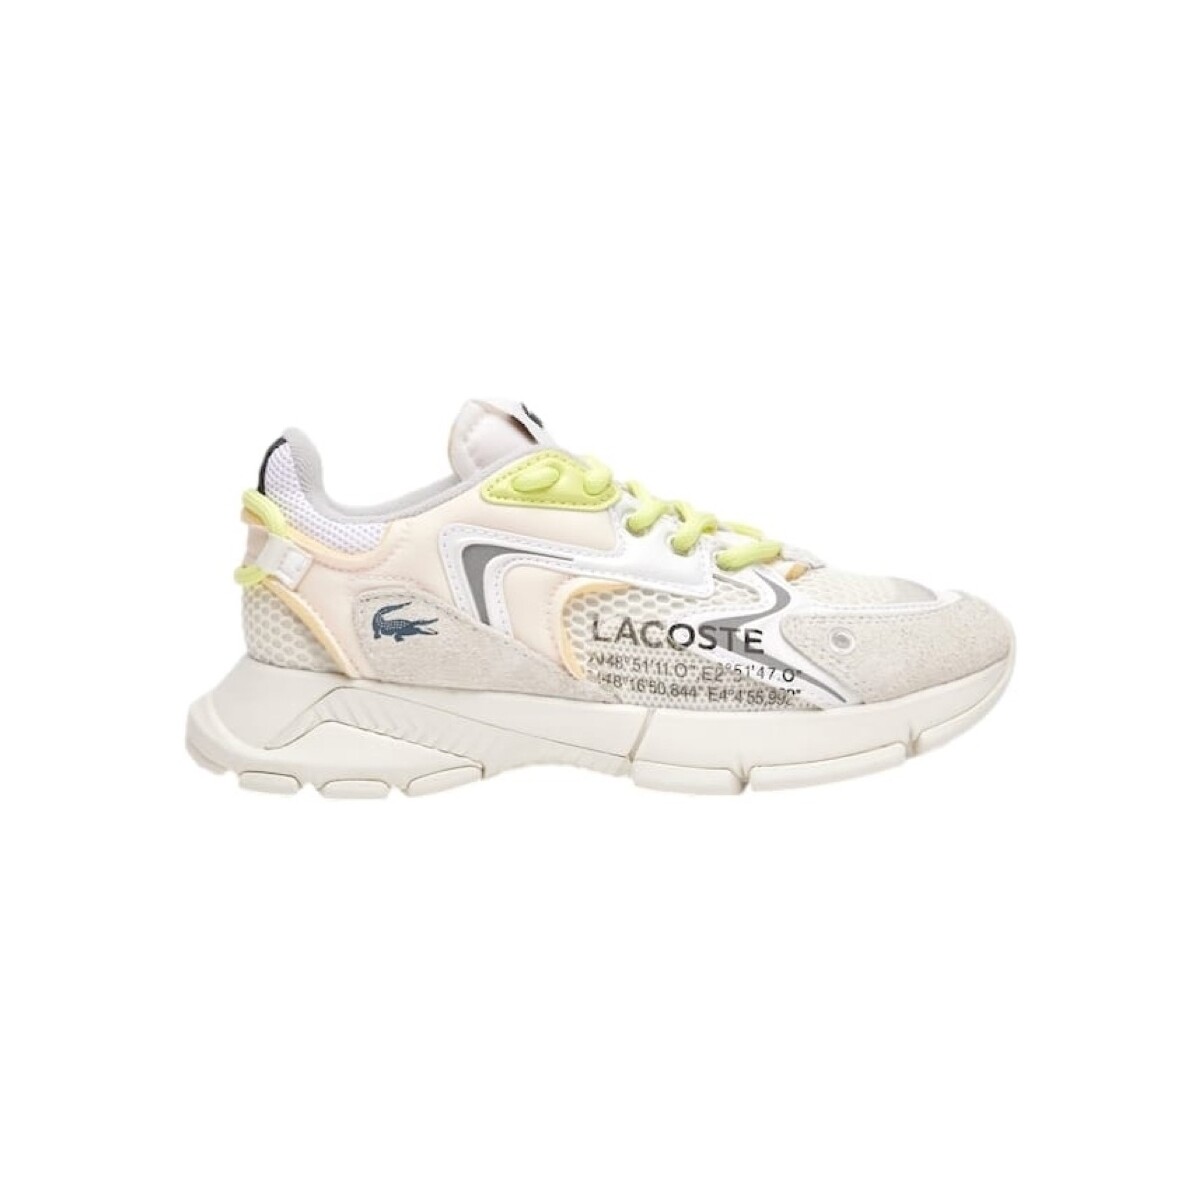 Sneakers Lacoste L003 NEO 223 1 SFA – Off White/LT Green